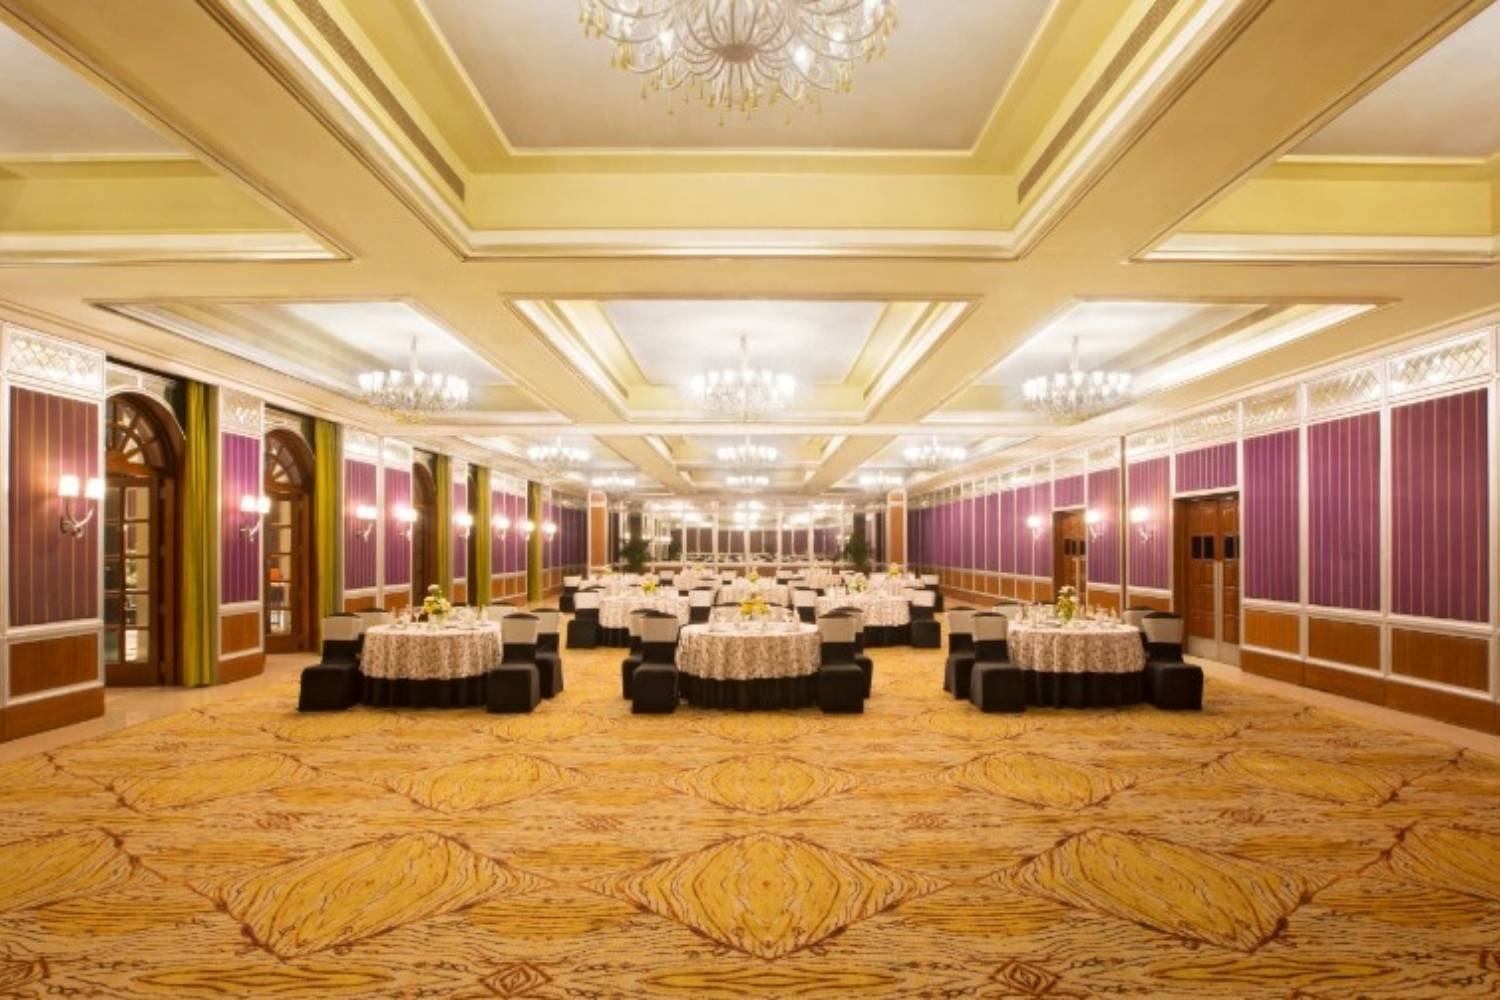 Royal hotel banquet hall at Taj West End